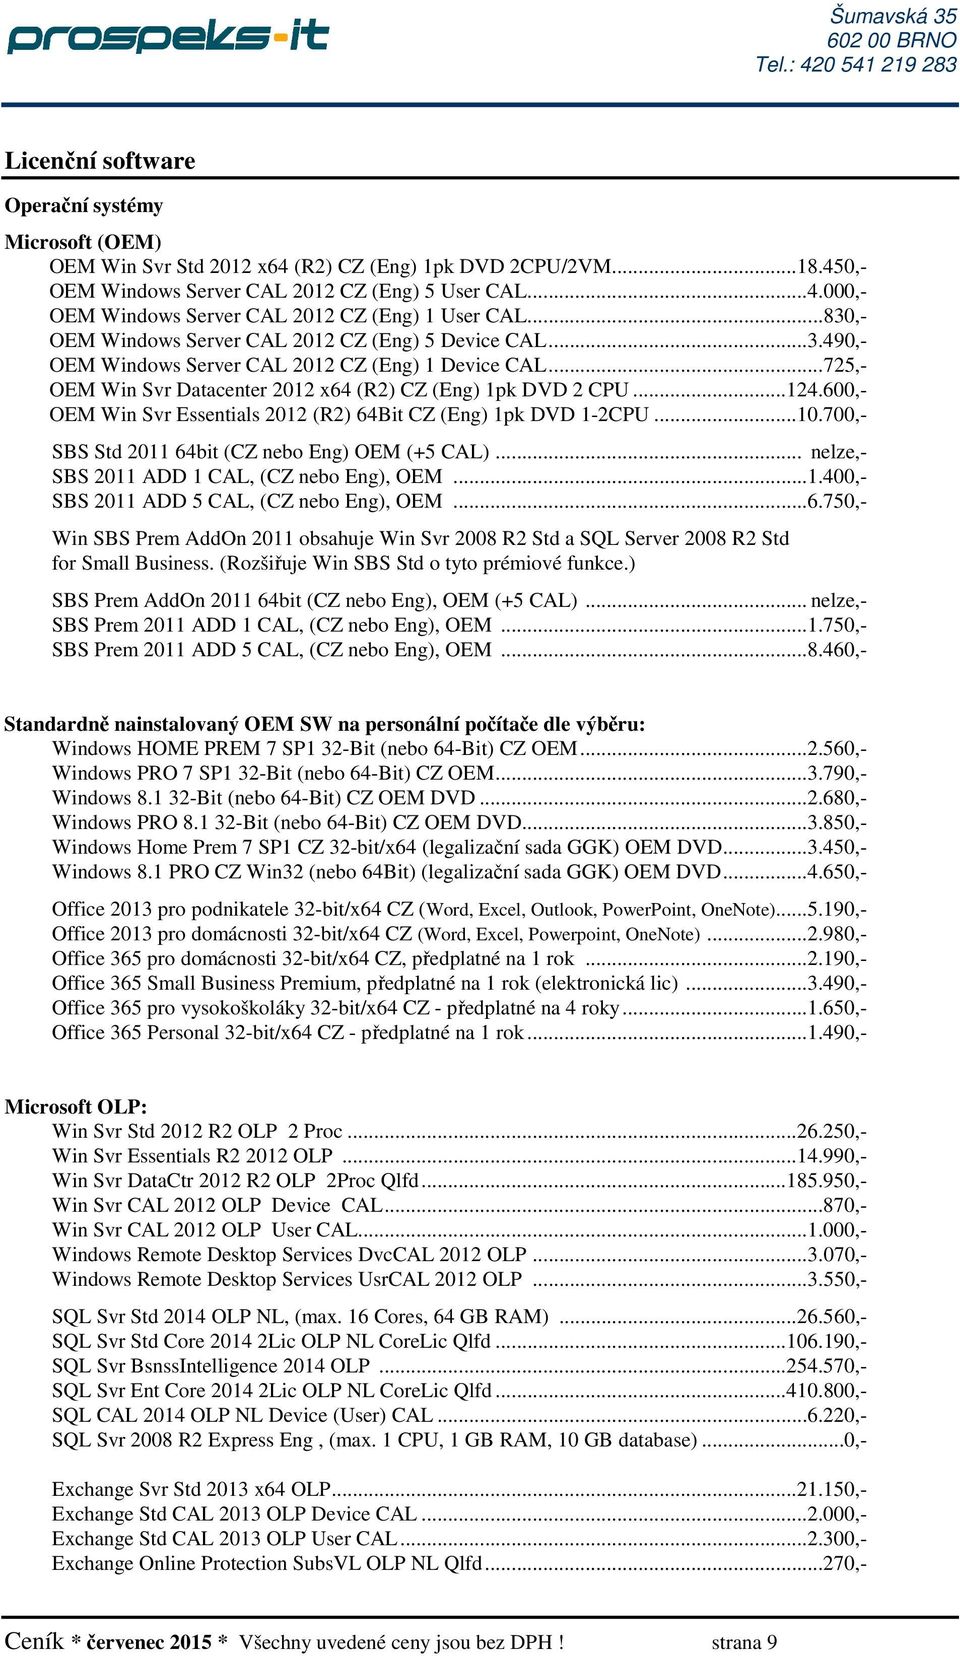 600,- OEM Win Svr Essentials 2012 (R2) 64Bit CZ (Eng) 1pk DVD 1-2CPU...10.700,- SBS Std 2011 64bit (CZ nebo Eng) OEM (+5 CAL)... nelze,- SBS 2011 ADD 1 CAL, (CZ nebo Eng), OEM...1.400,- SBS 2011 ADD 5 CAL, (CZ nebo Eng), OEM.